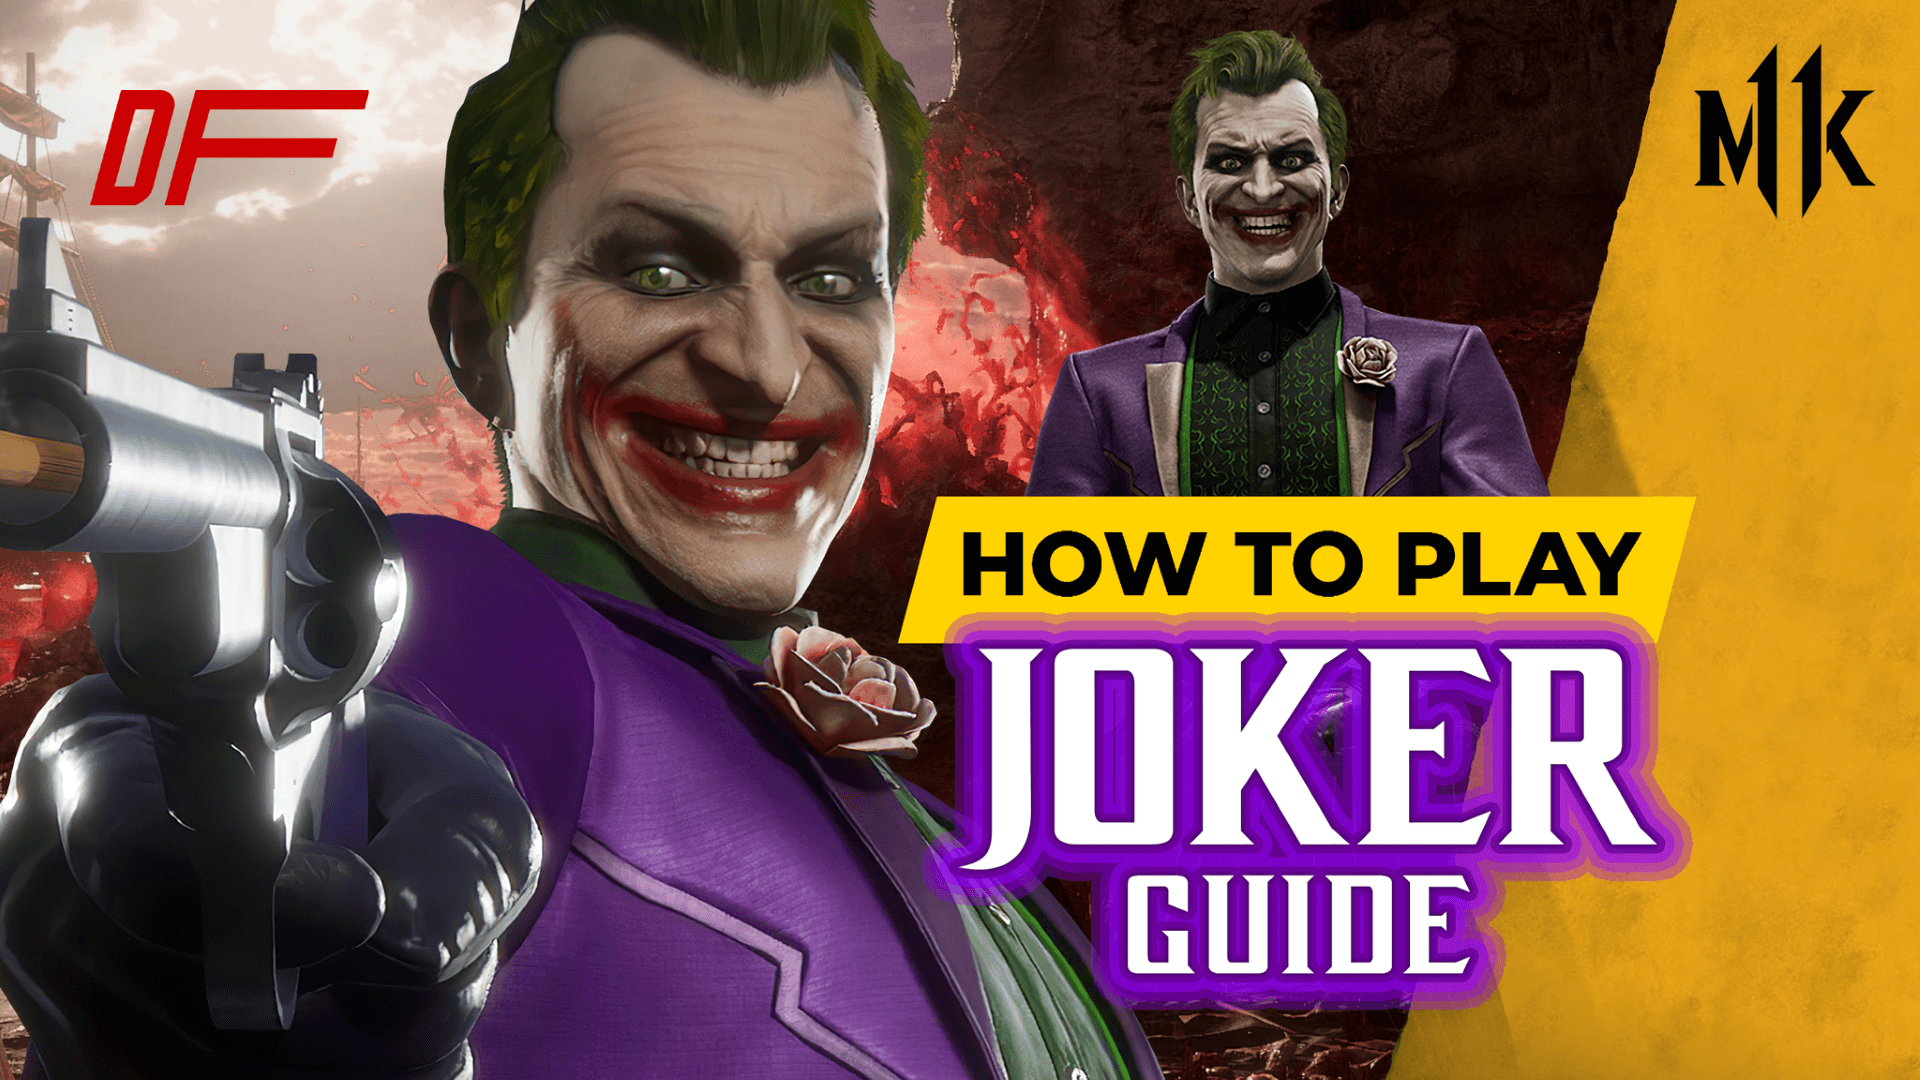 Mortal Kombat 11 Joker Guide Featuring LawKorridor